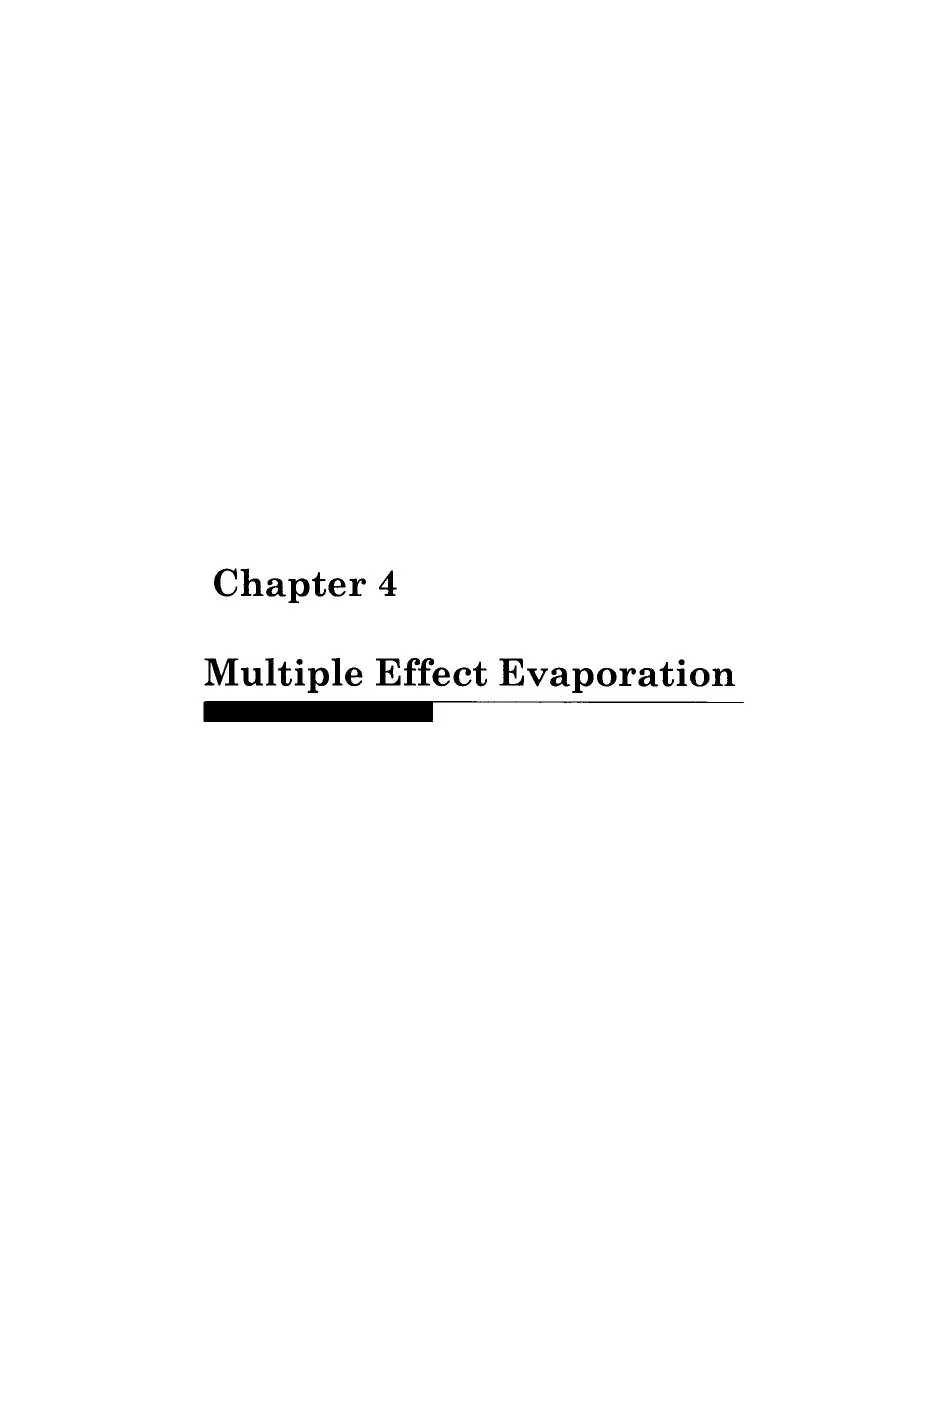 Chapter 4 Multiple Effect Evaporation